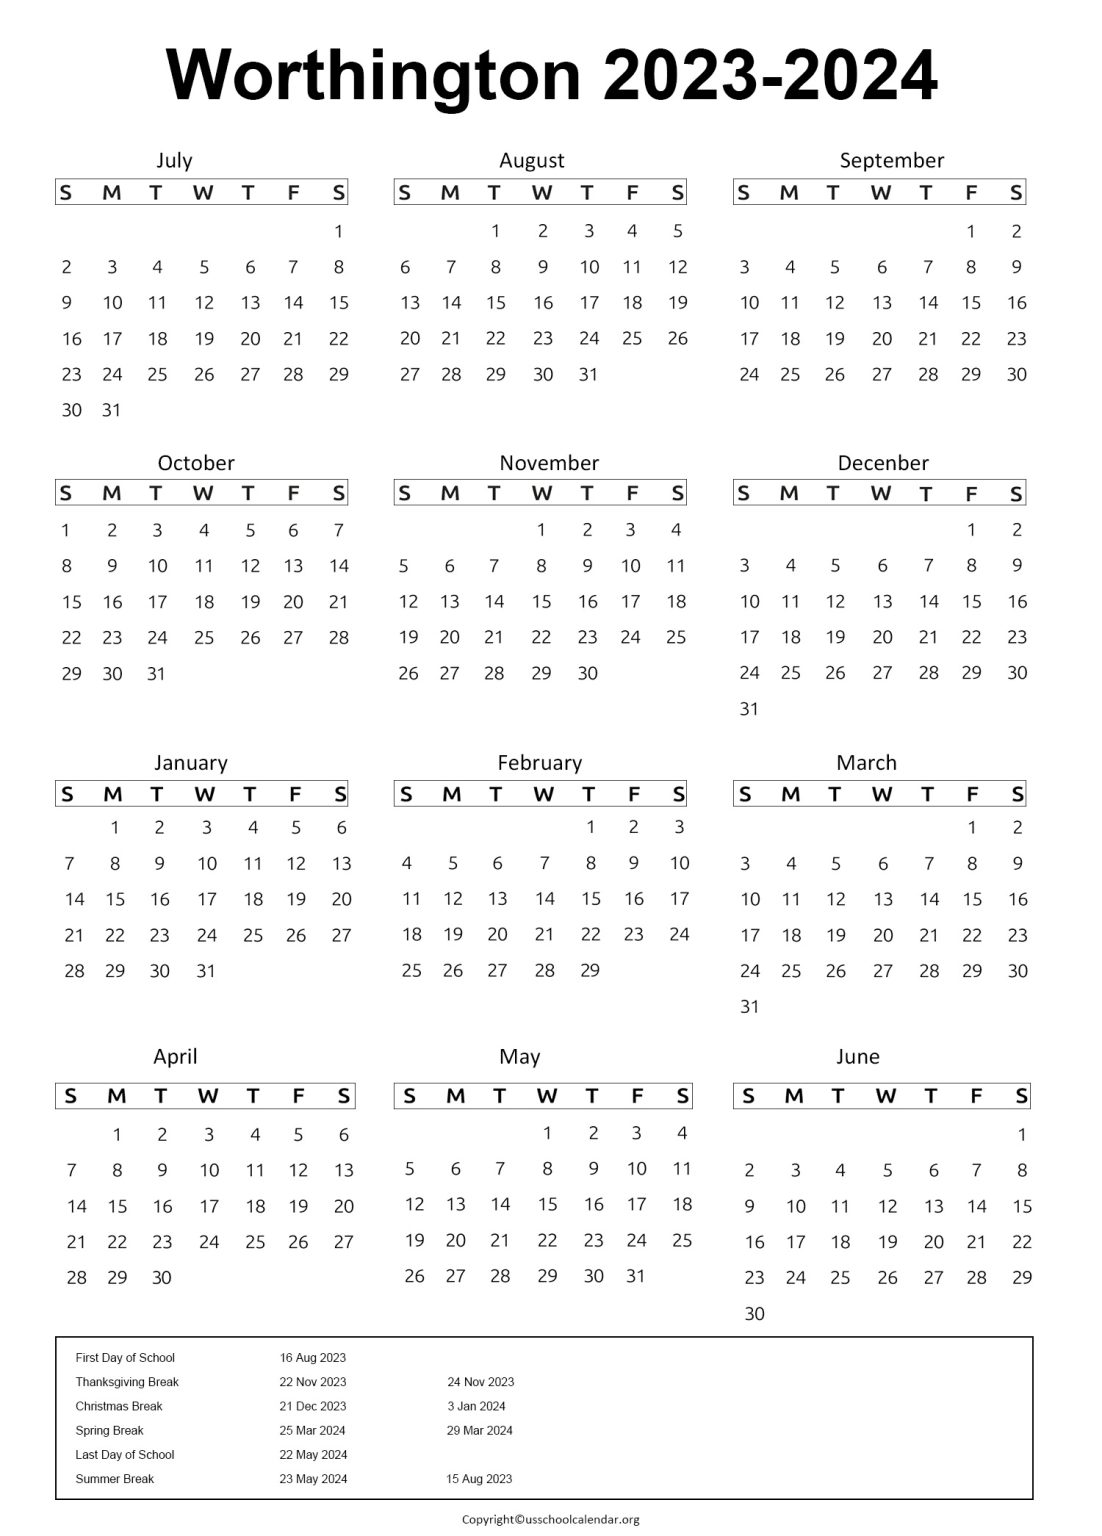 Worthington Schools Calendar with Holidays 2023 2024